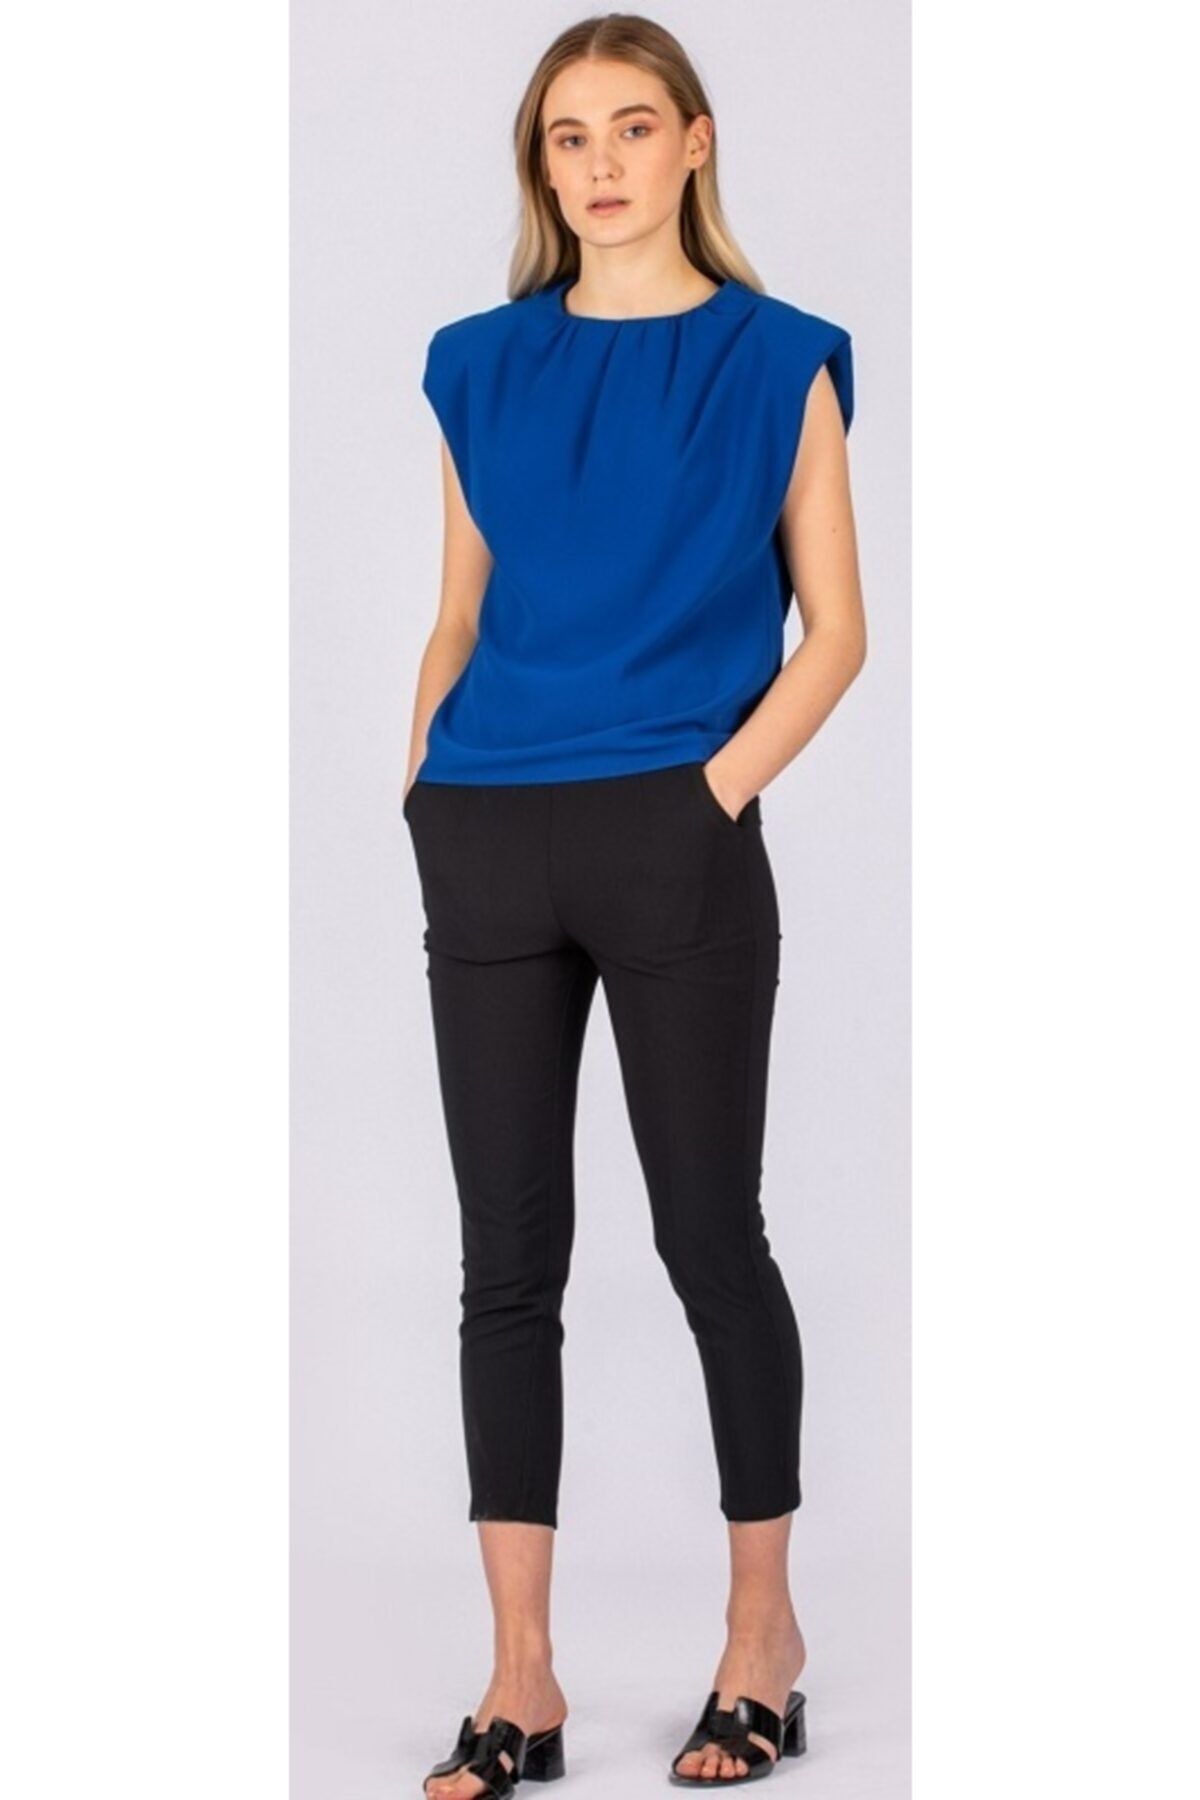 LUXXO Kadın Lacivert Bluz Y0105